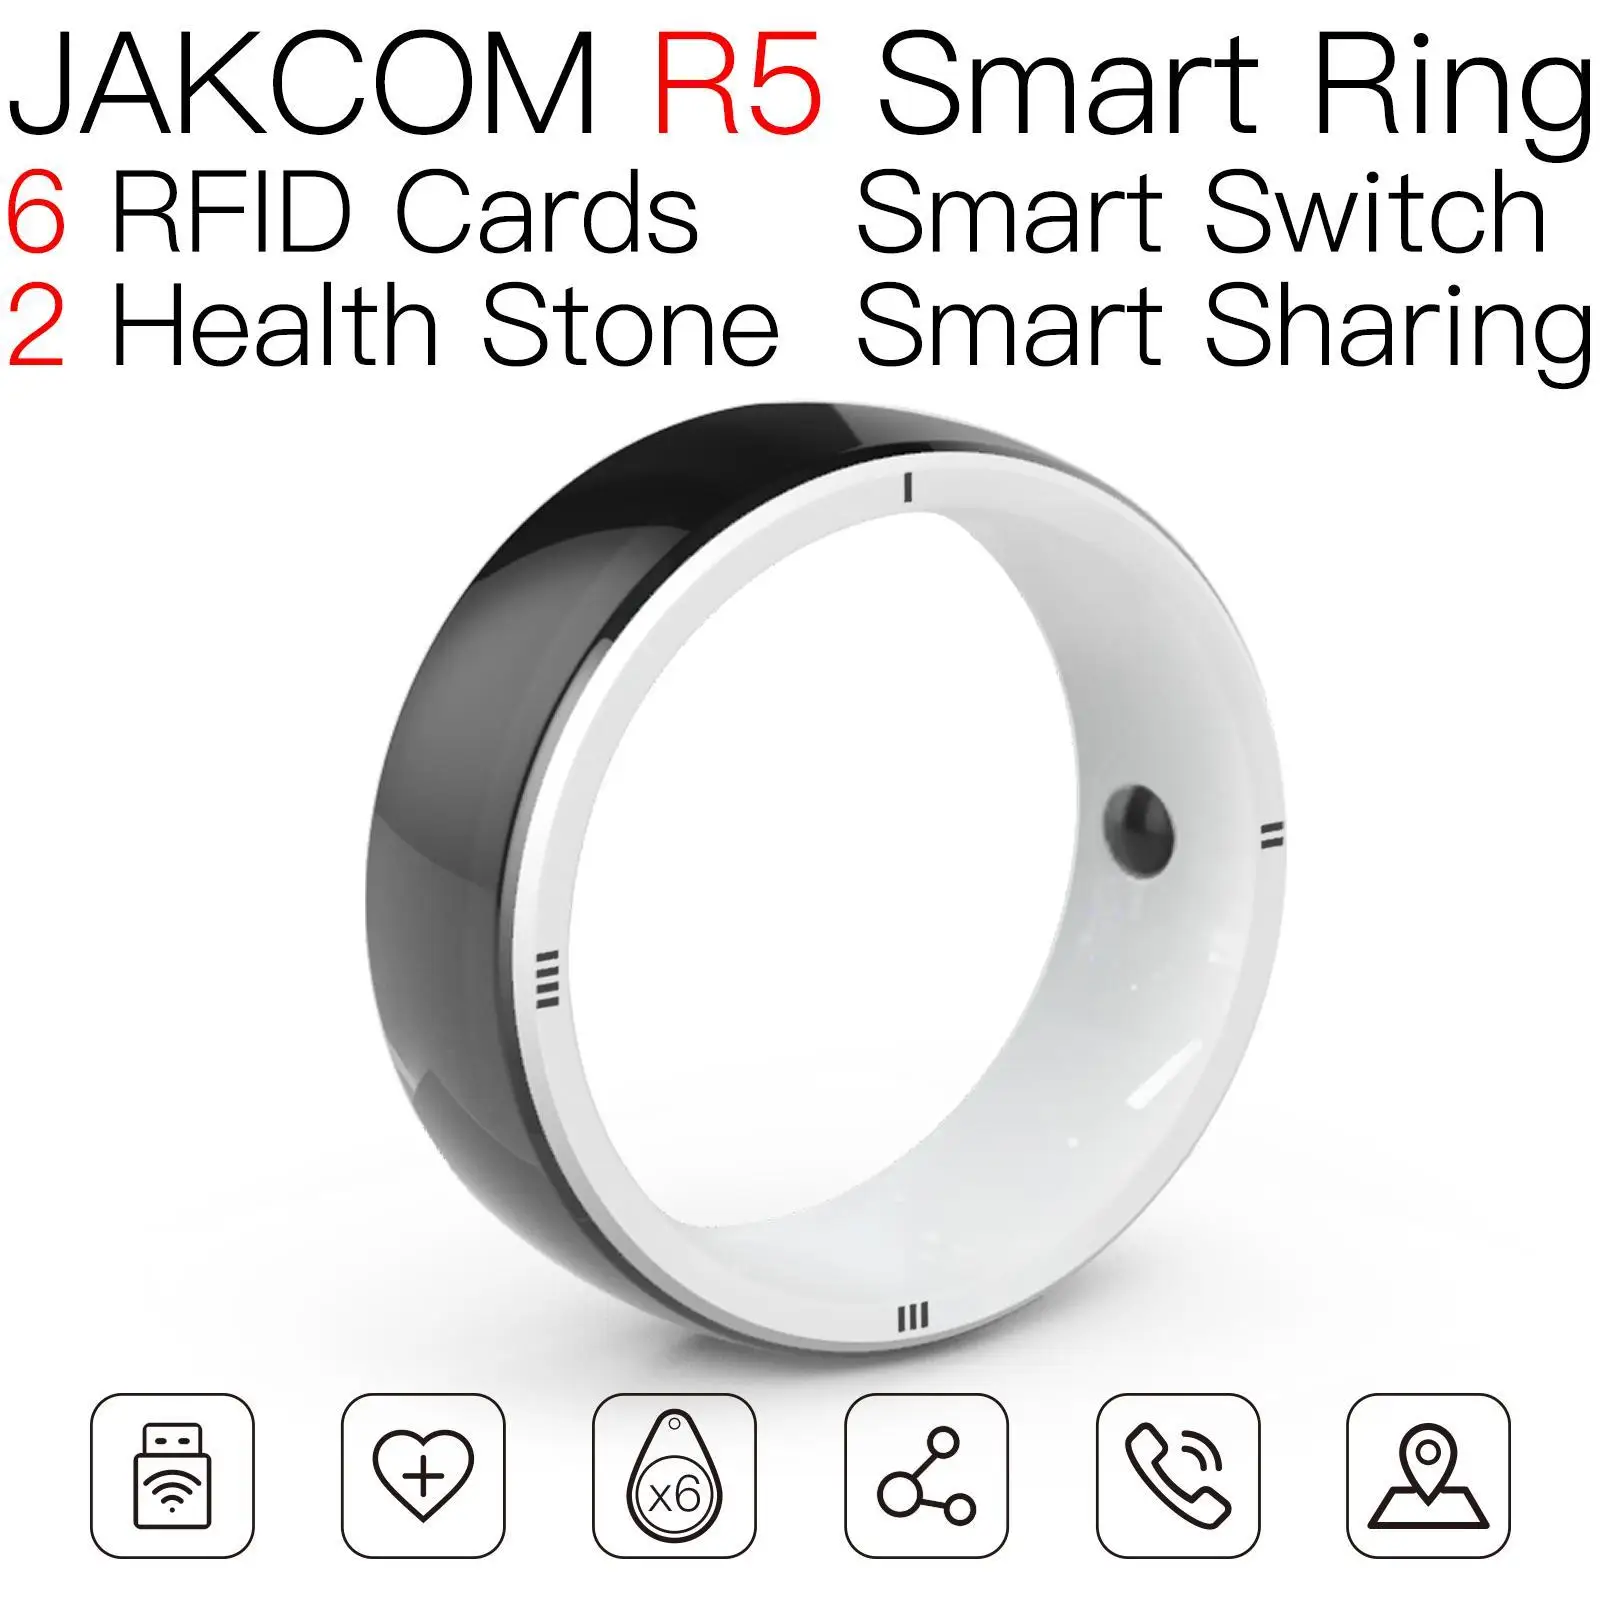 

JAKCOM R5 Smart Ring Super value than rfid aniaml crossing new horizon impact accounts etiquette adhesive intelligente